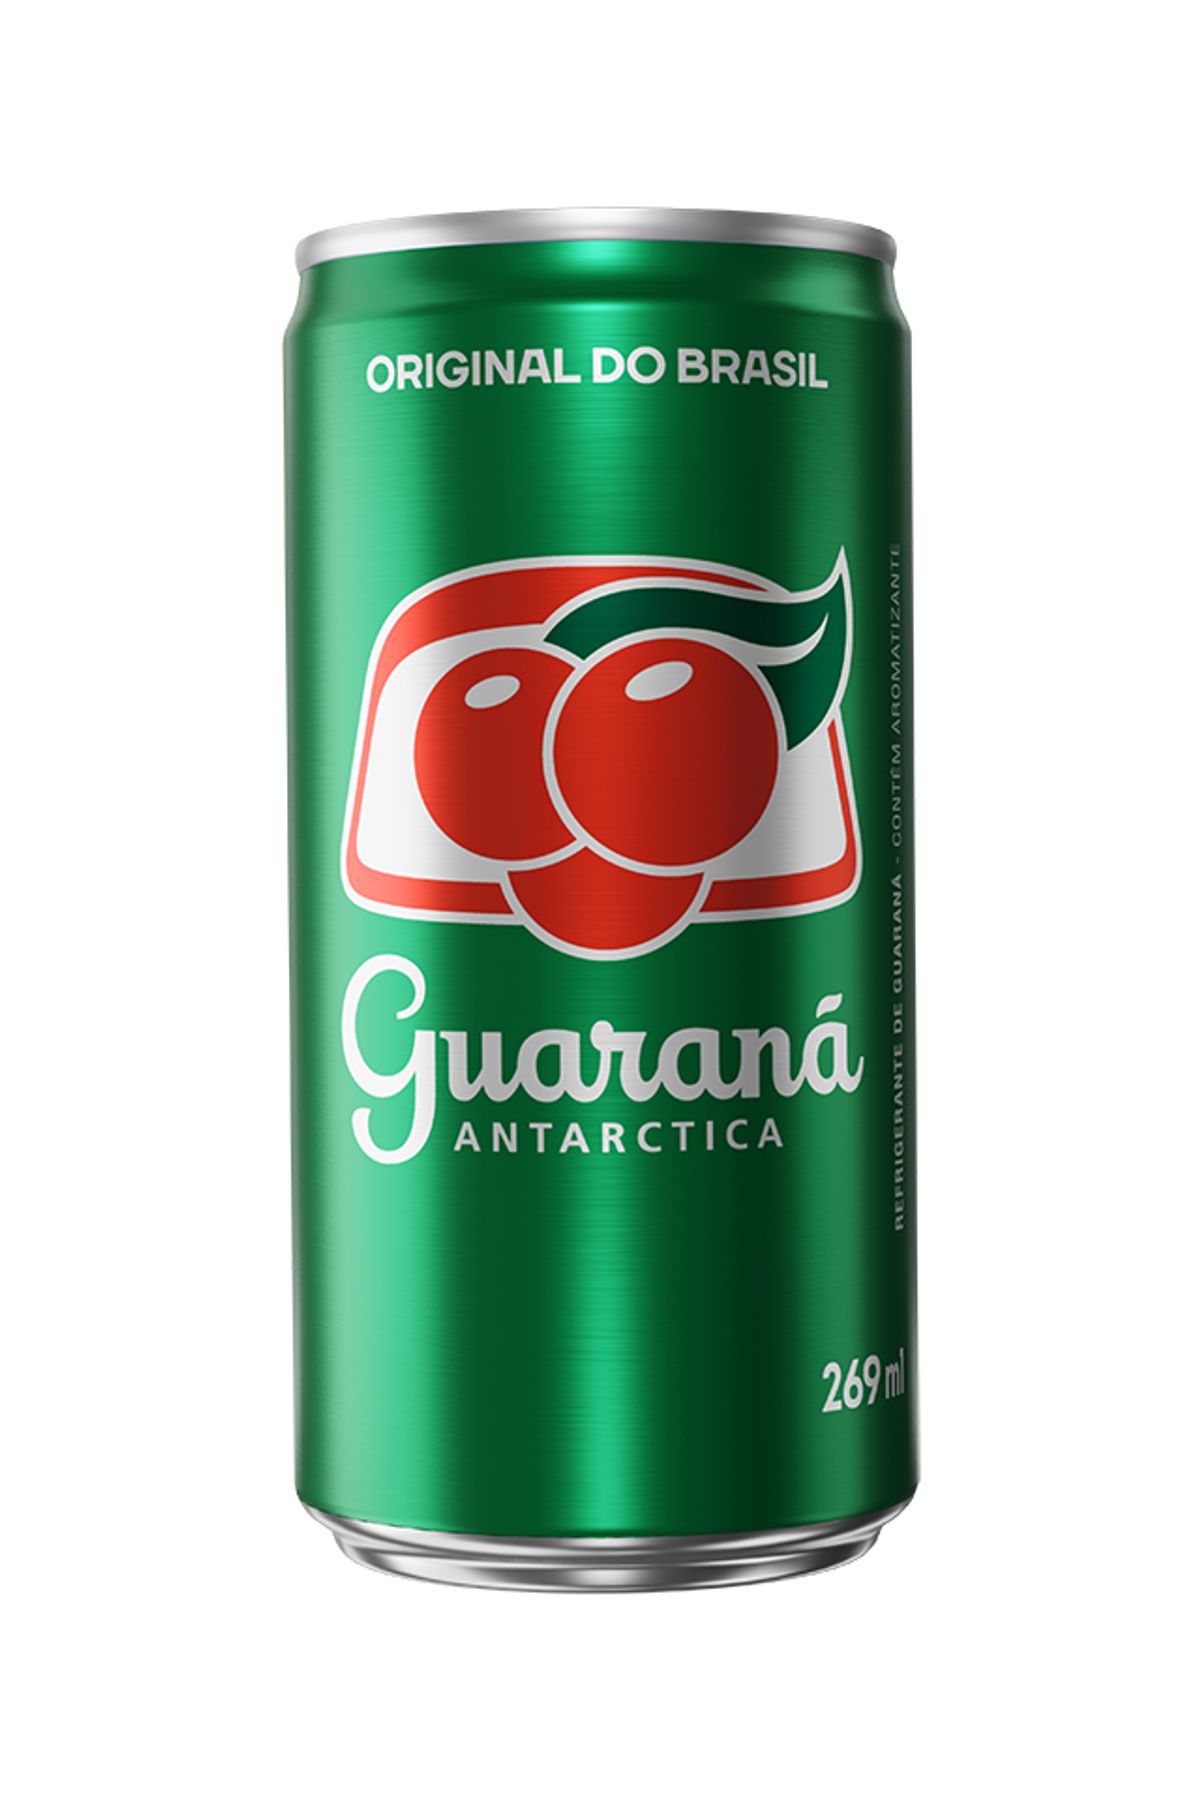 Guarana Antarctica with 12 cans – Emporio Brasil